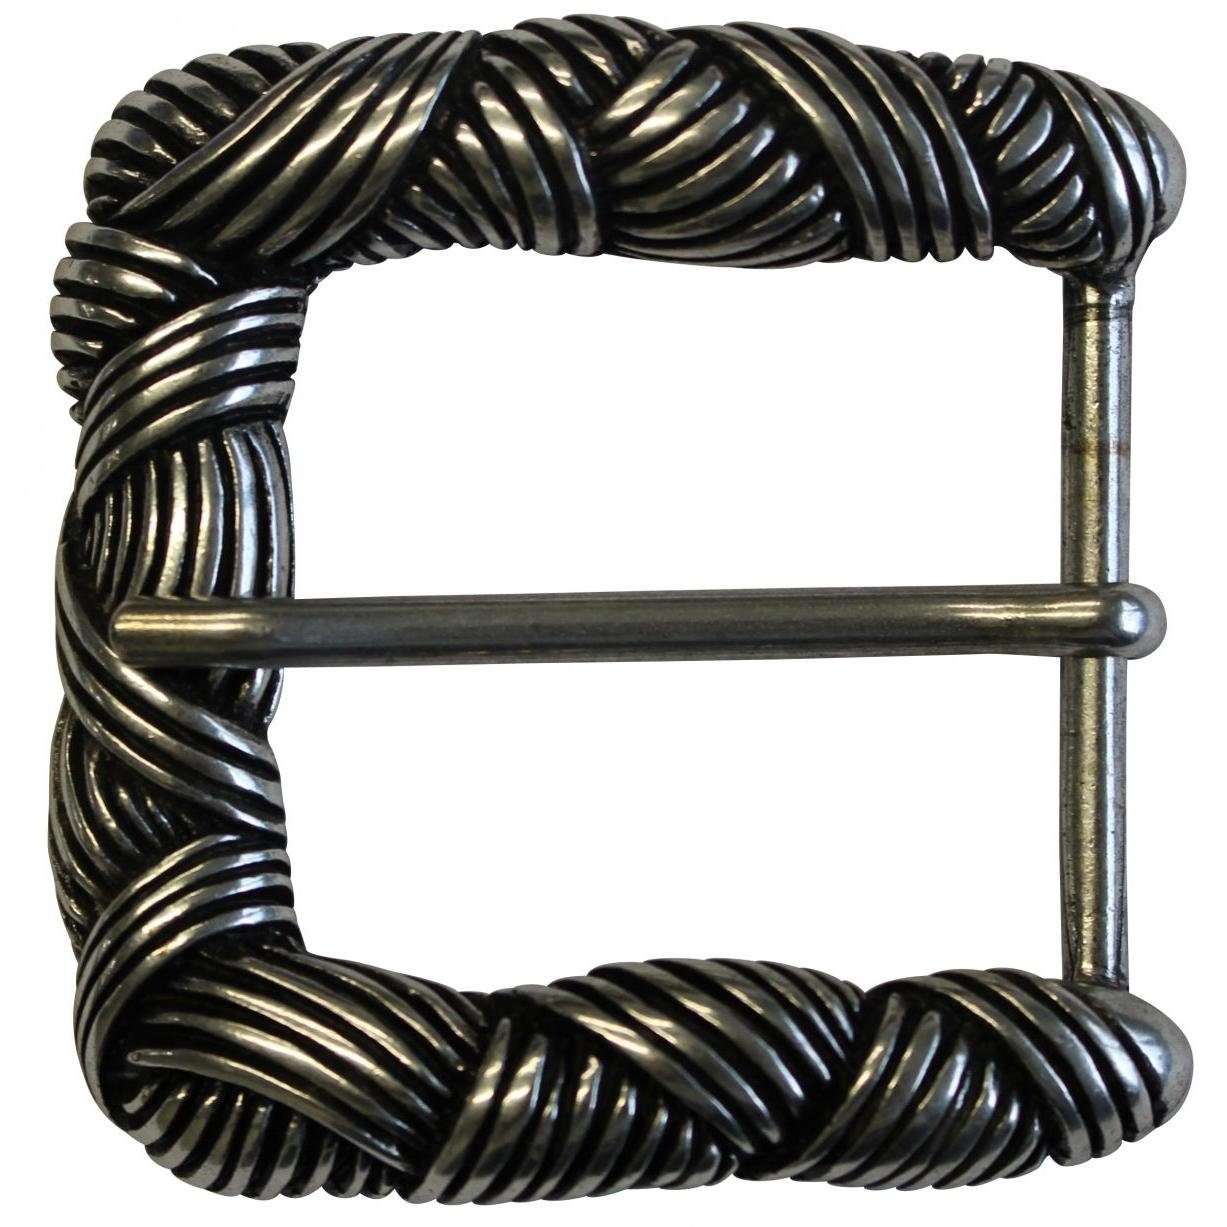 BELTINGER Gürtelschnalle String 4,0 cm - Gürtelschließe 40mm - Dorn-Schließe - Gürtel bis 4cm